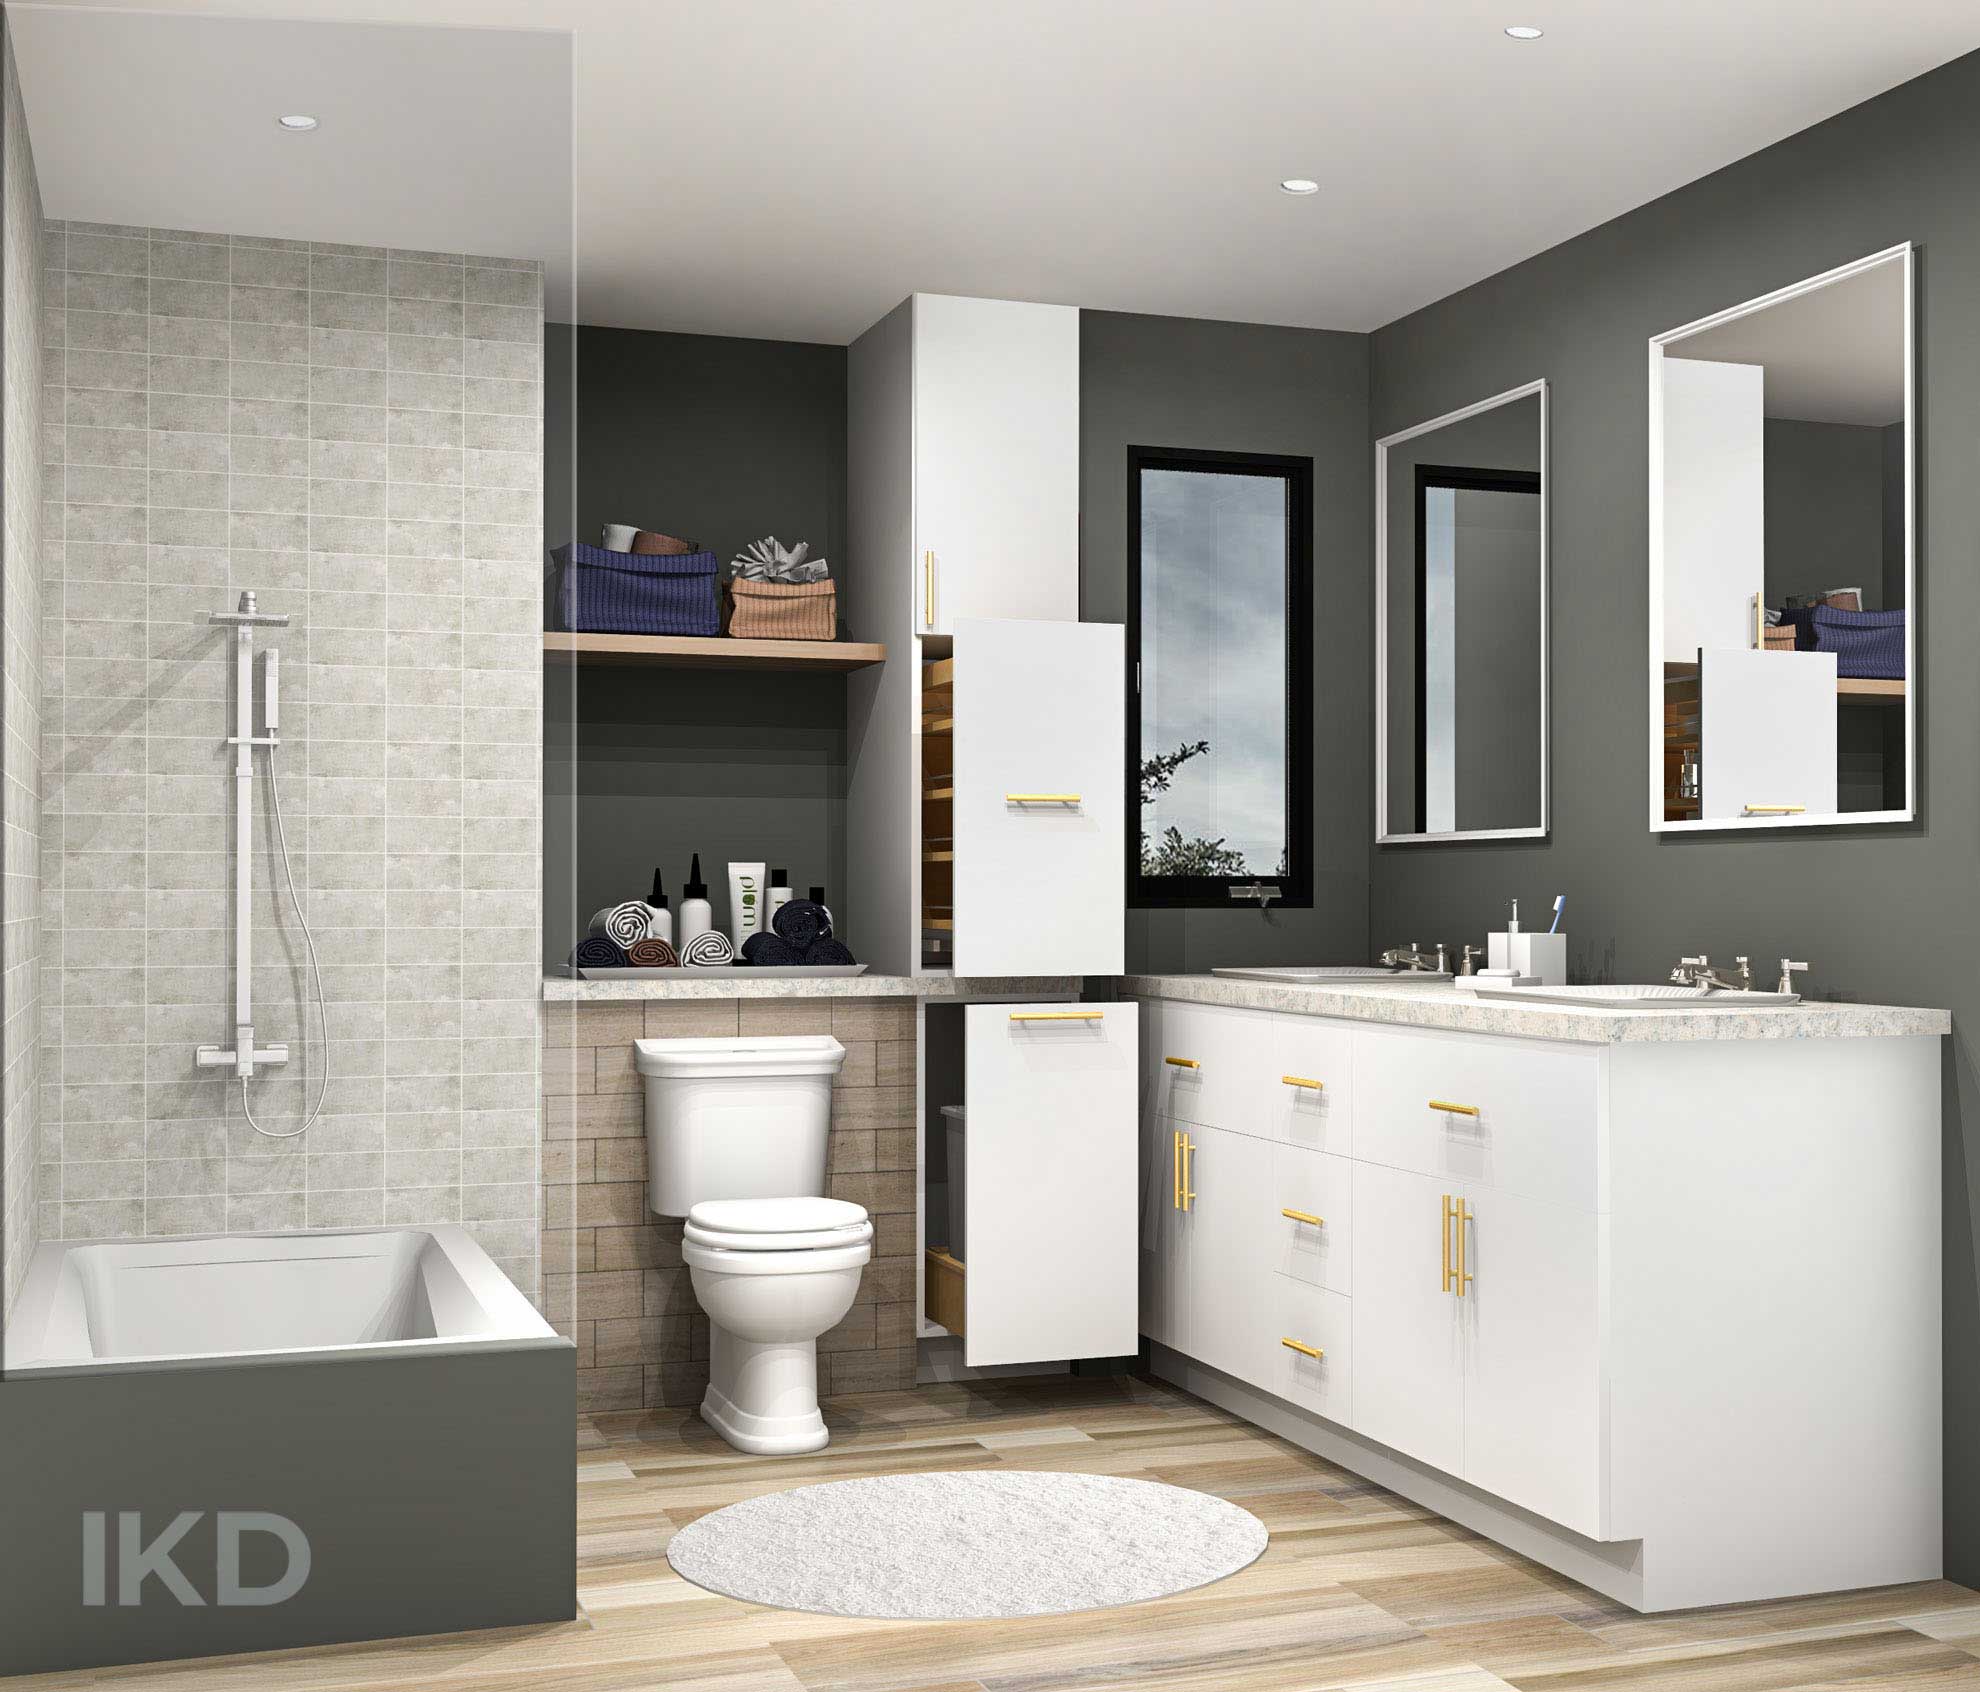 https://inspiredkitchendesign.com/wp-content/uploads/2023/08/1-more-cabinet-hacks-for-your-ikea-bathroom-design.jpg